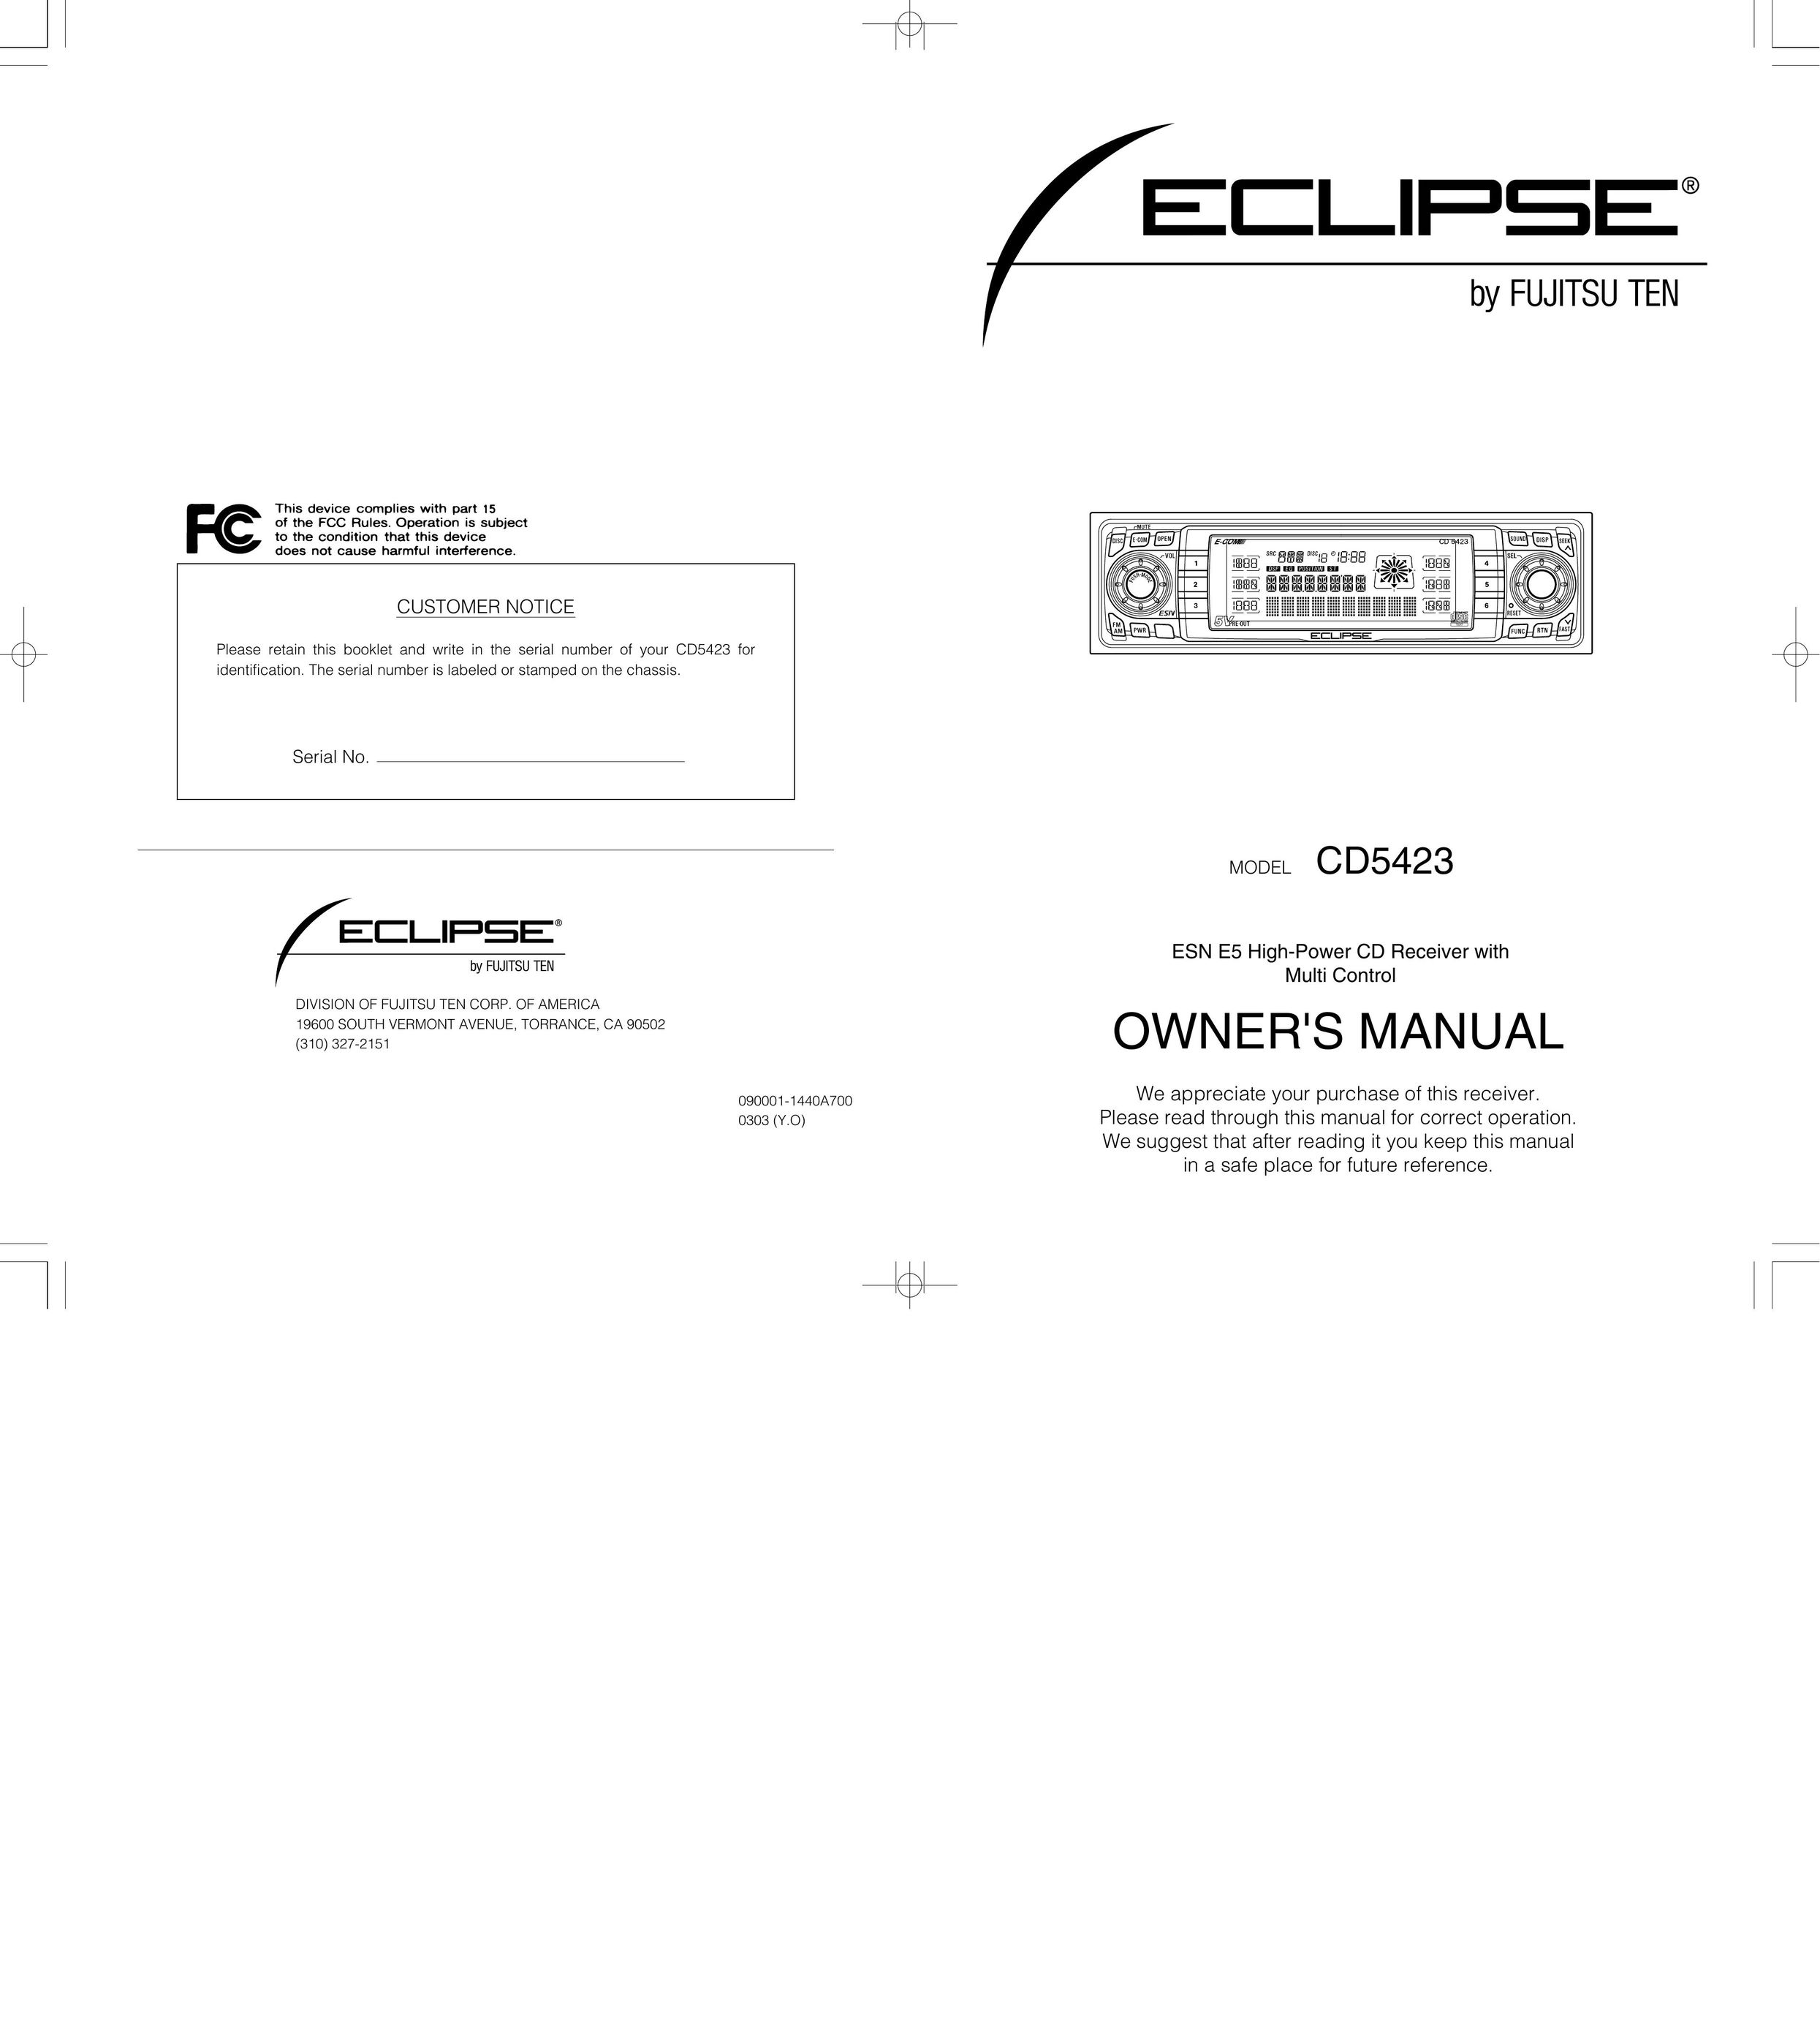 Eclipse - Fujitsu Ten CD5423 Car Stereo System User Manual